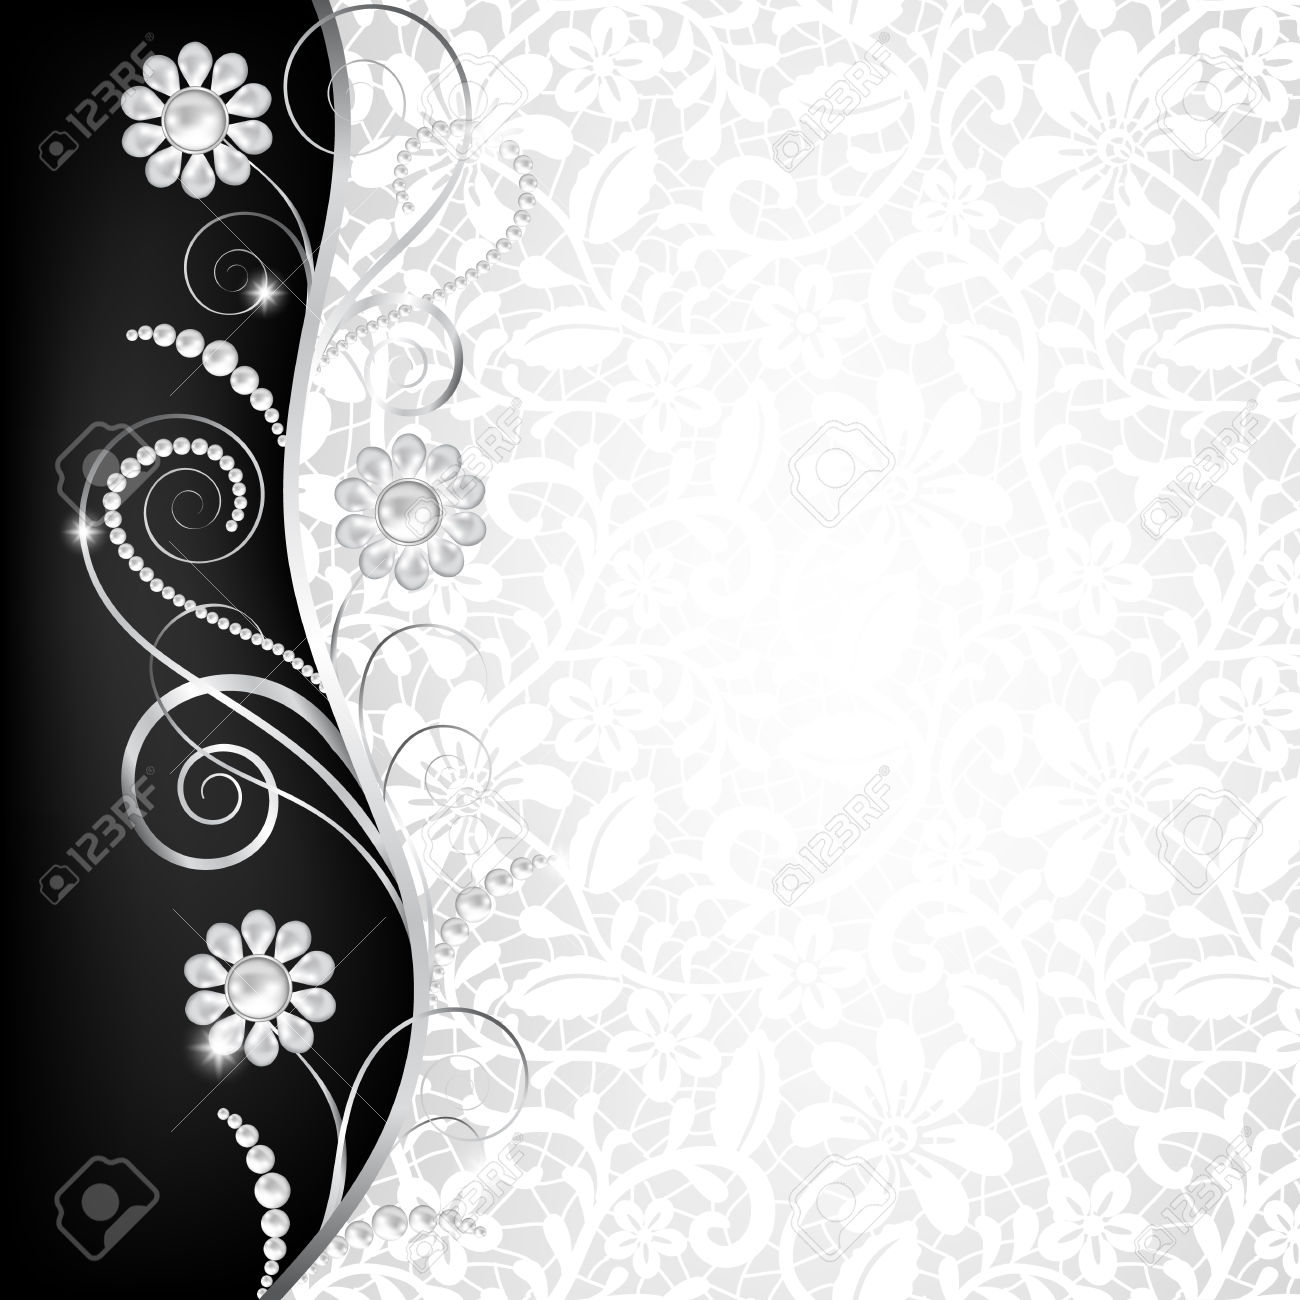 vip壁紙hd,テキスト,パターン,黒と白,設計,花柄